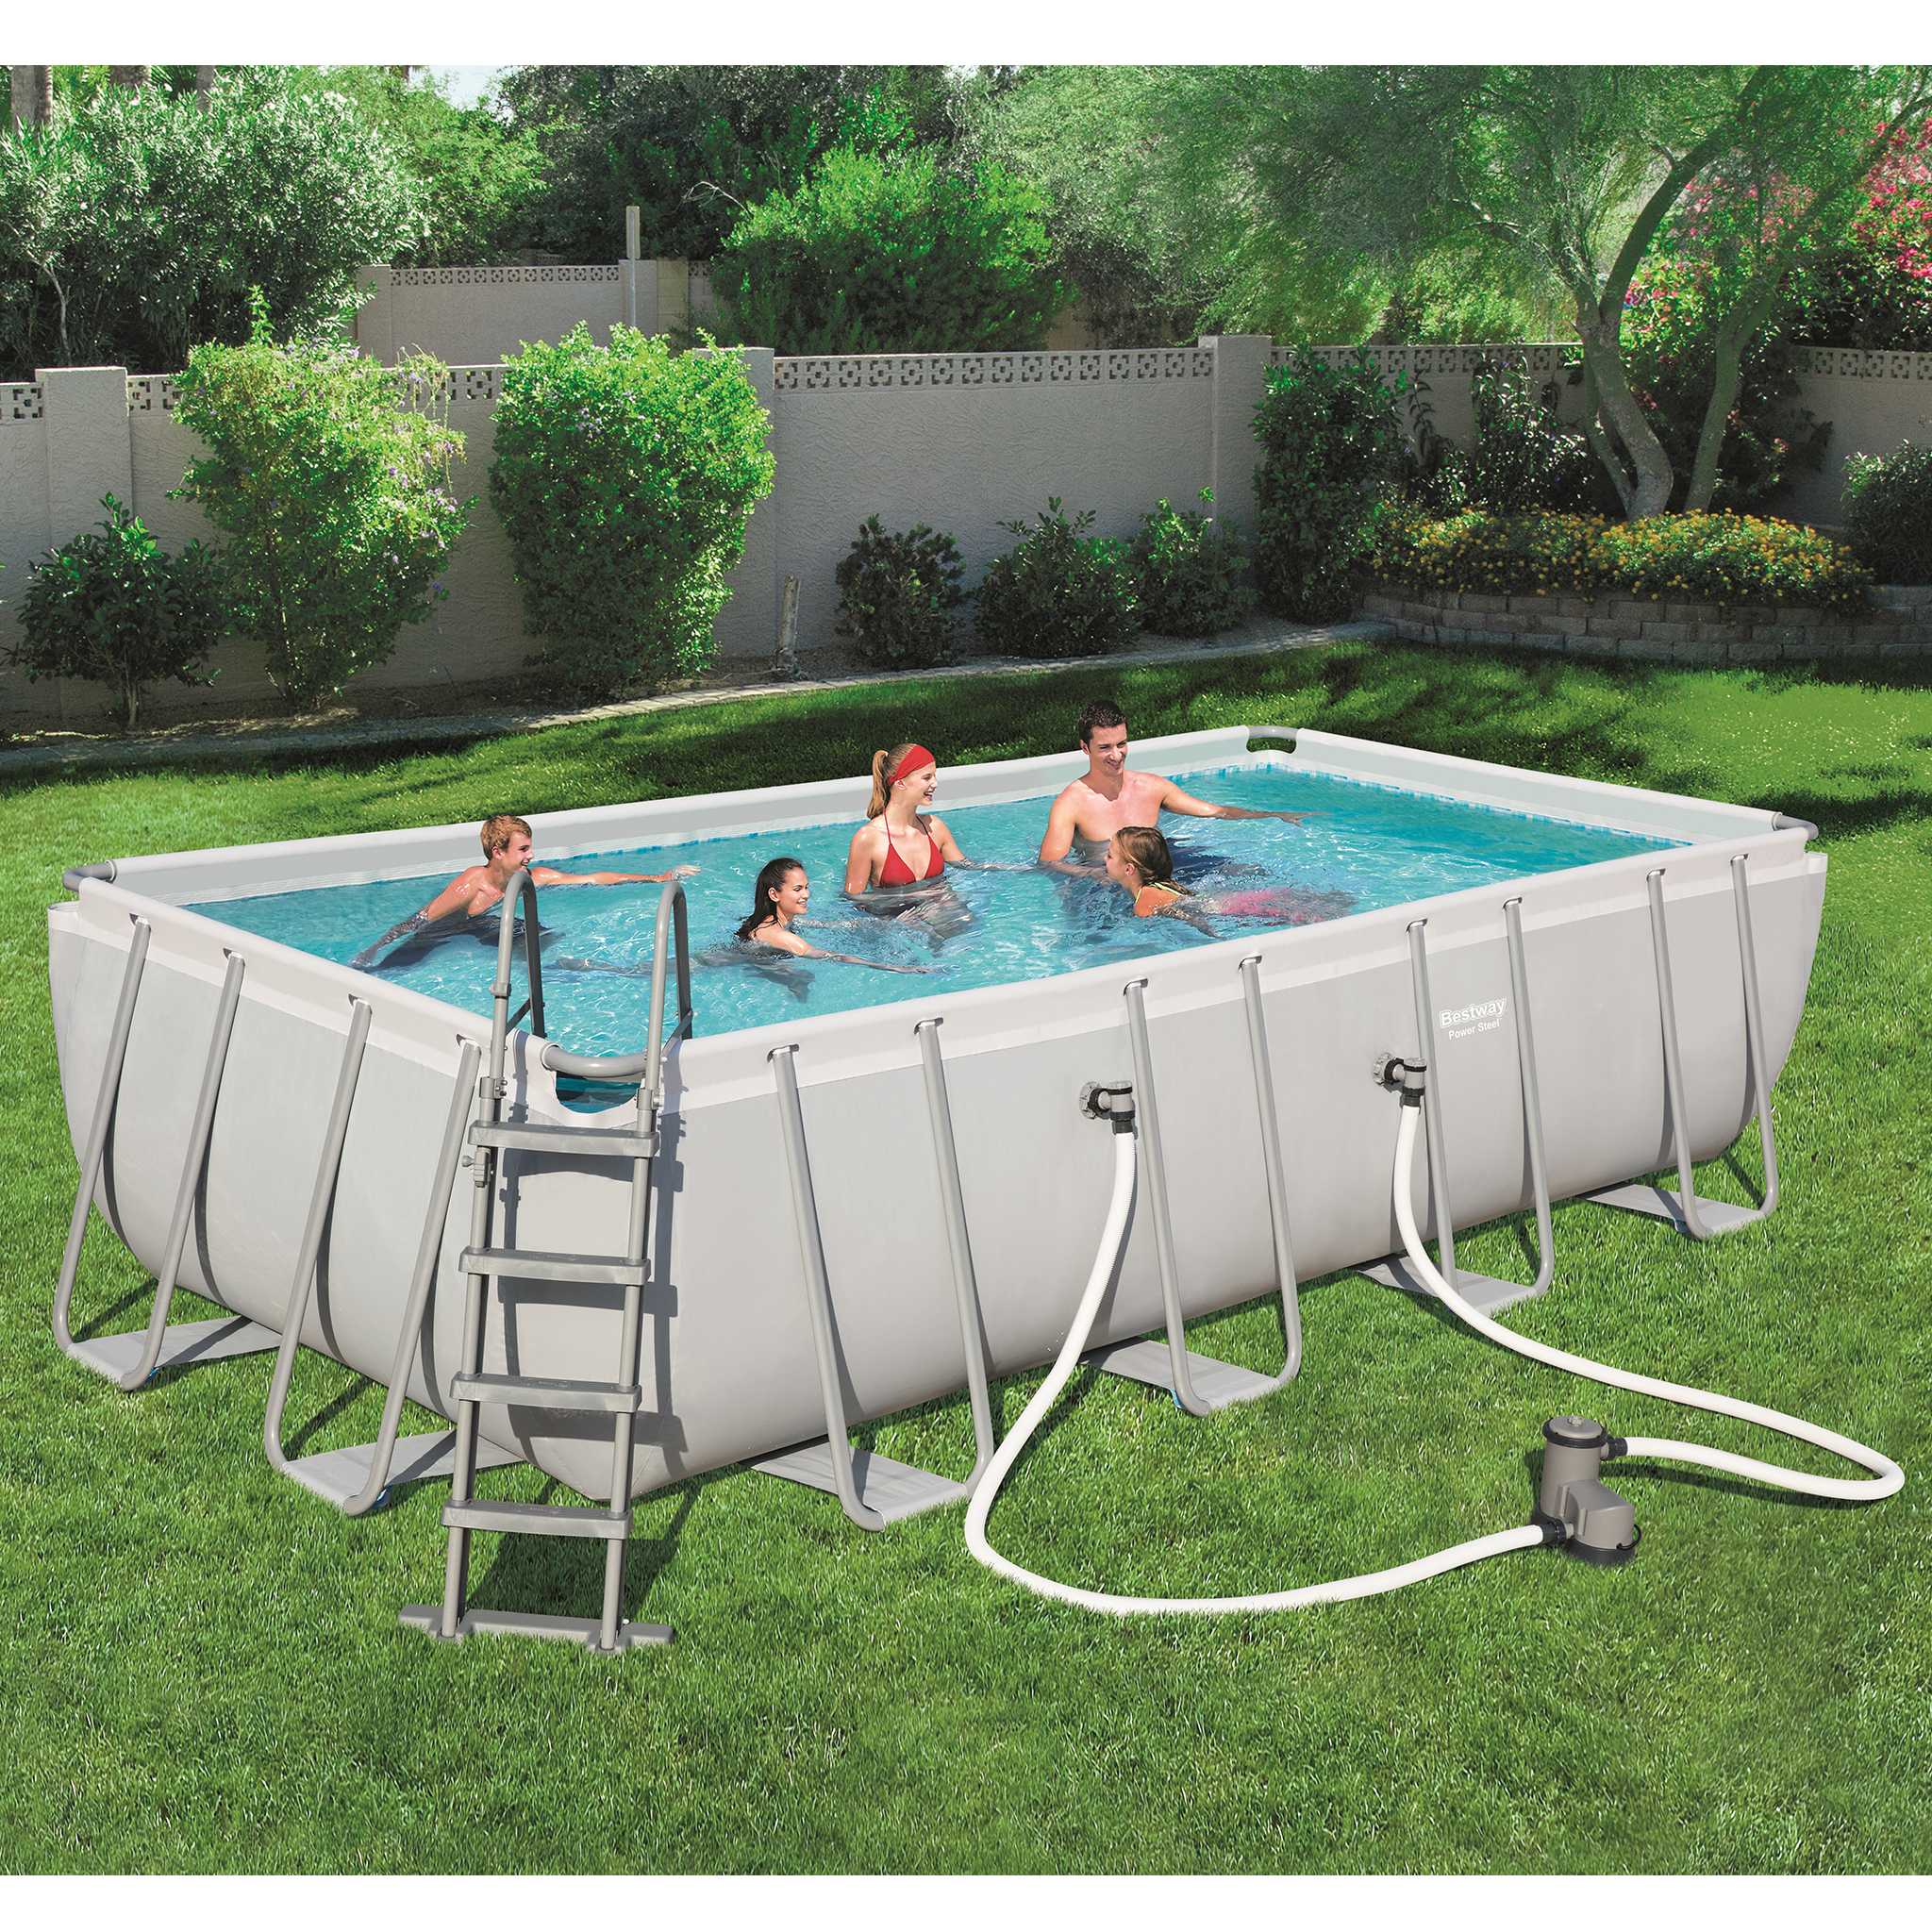 Produktfoto för Bestway pool ovan mark 5,5x2,7m - 122cm djup | Power Steel (56465)